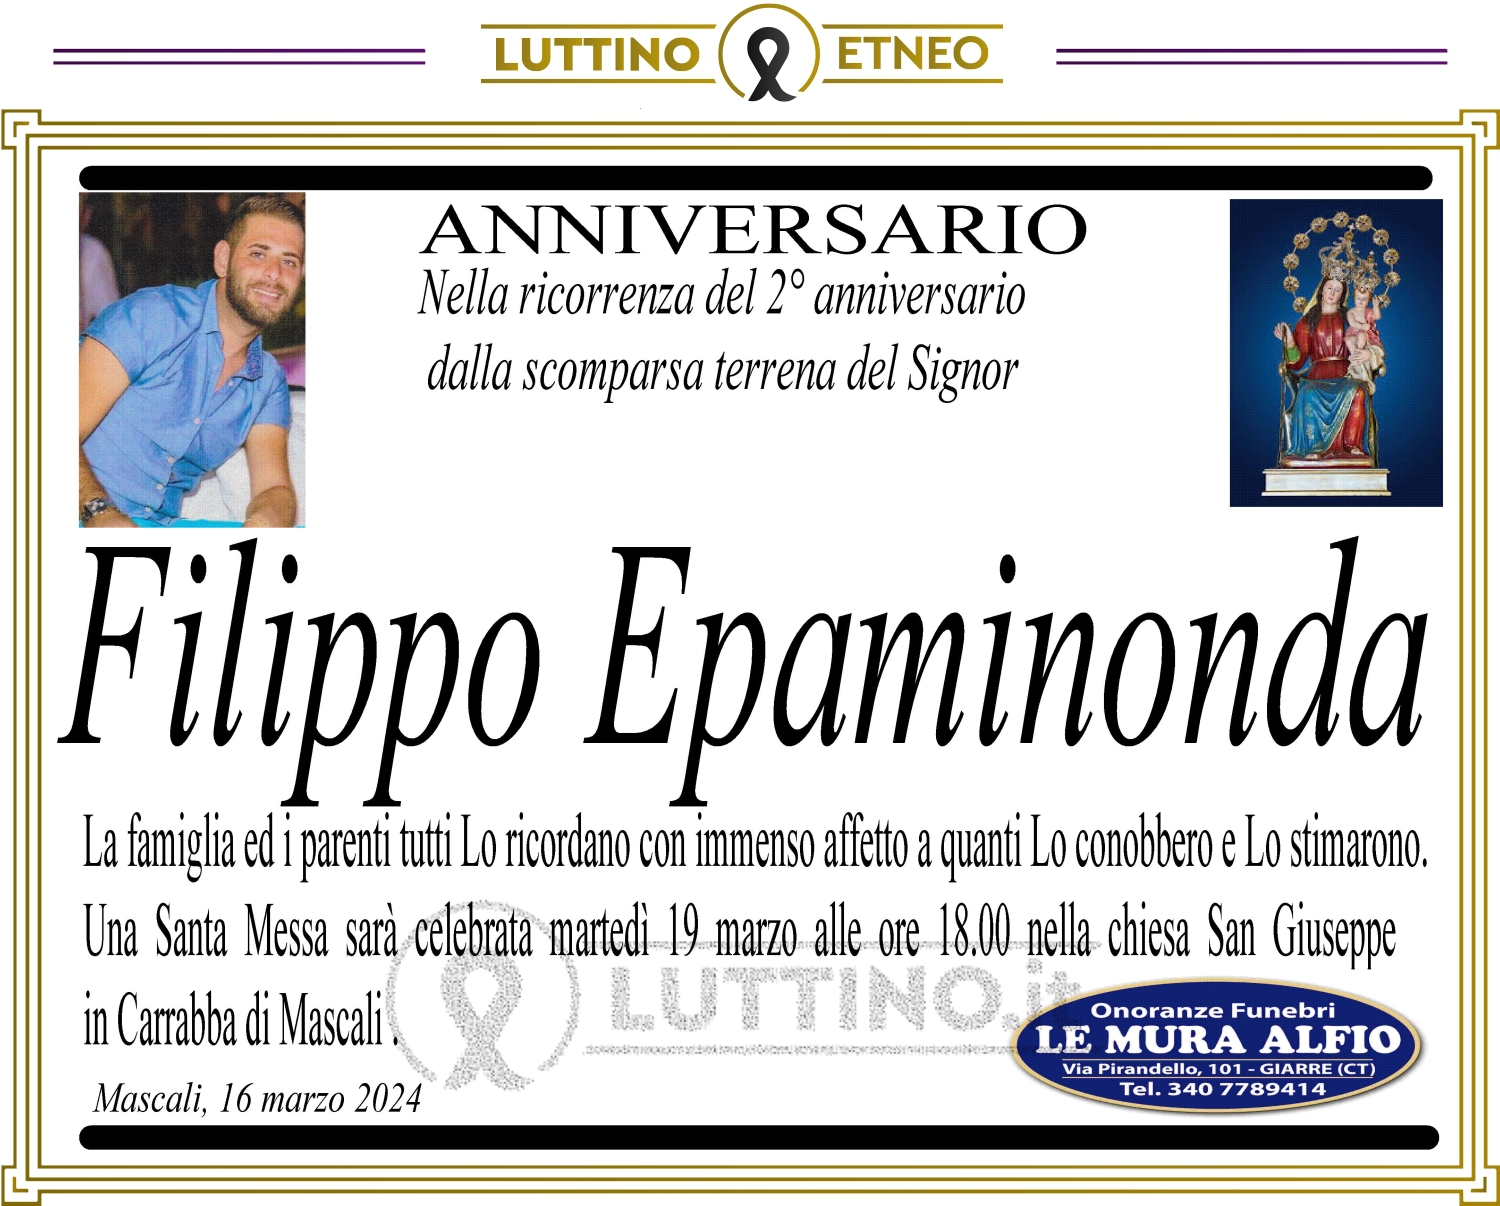 Filippo Epaminonda